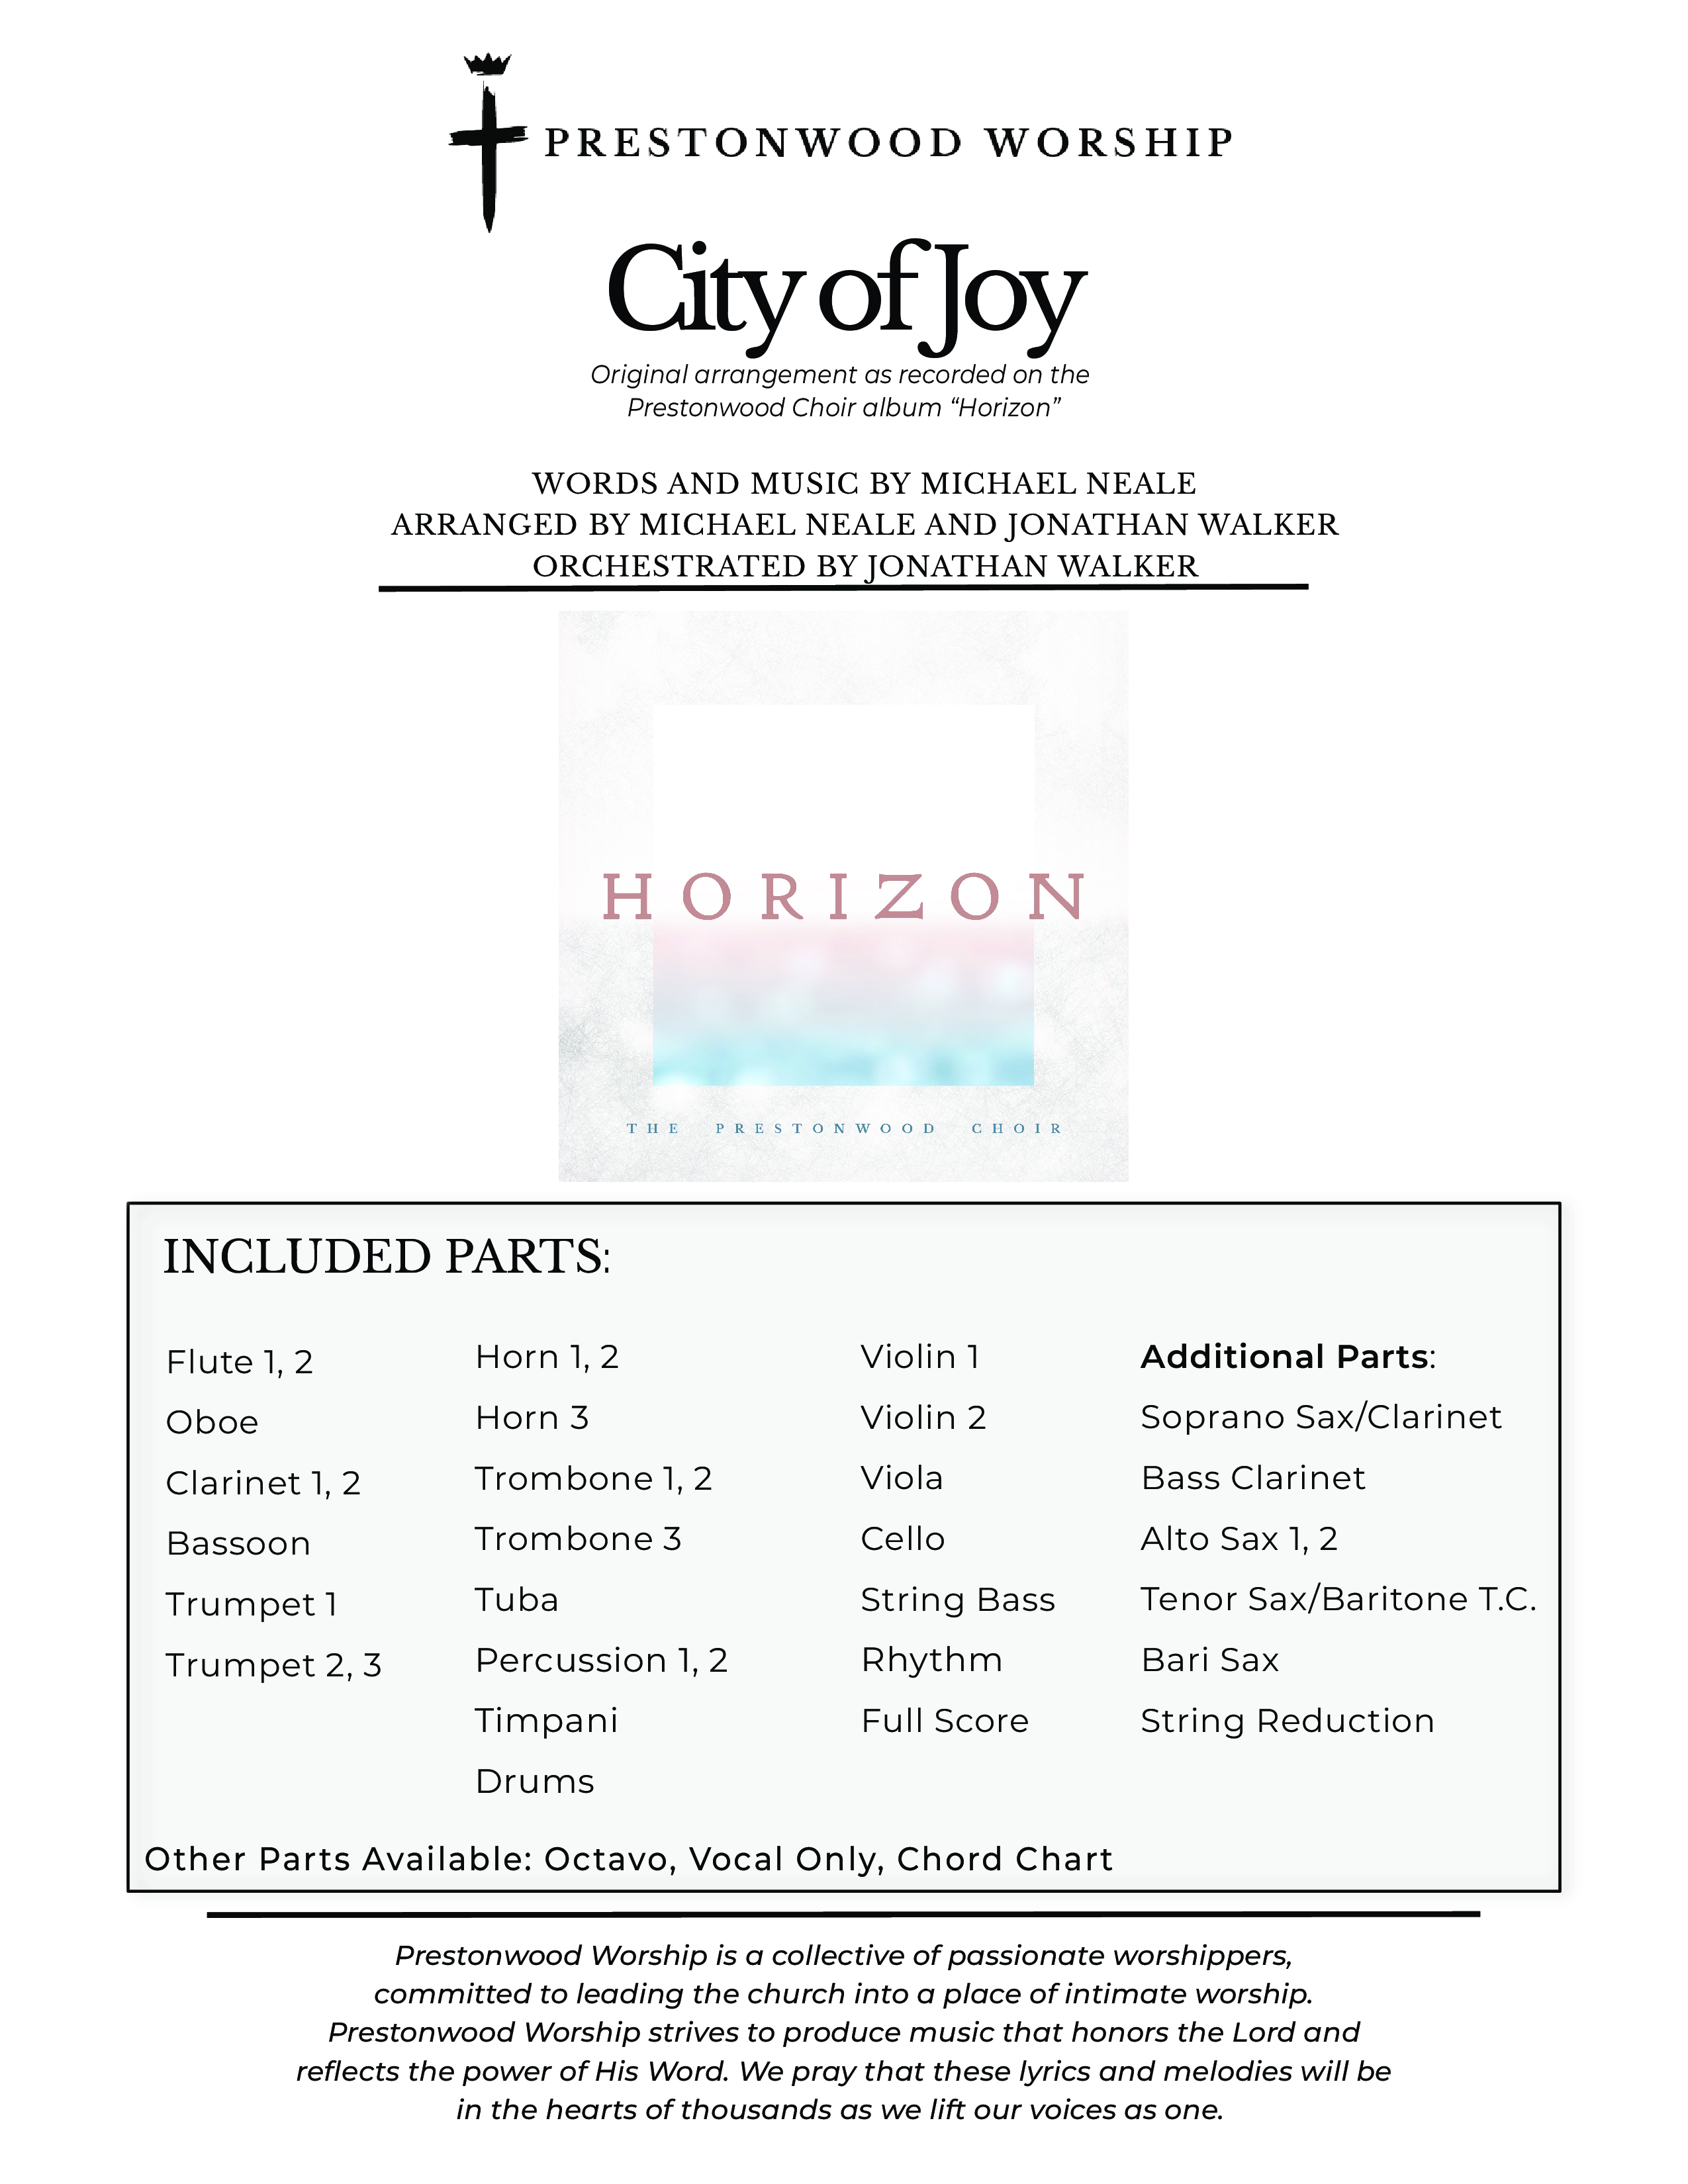 City Of Joy (Choral Anthem SATB) Cover Sheet (Prestonwood Worship / Prestonwood Choir / Arr. Michael Neale / Orch. Jonathan Walker)